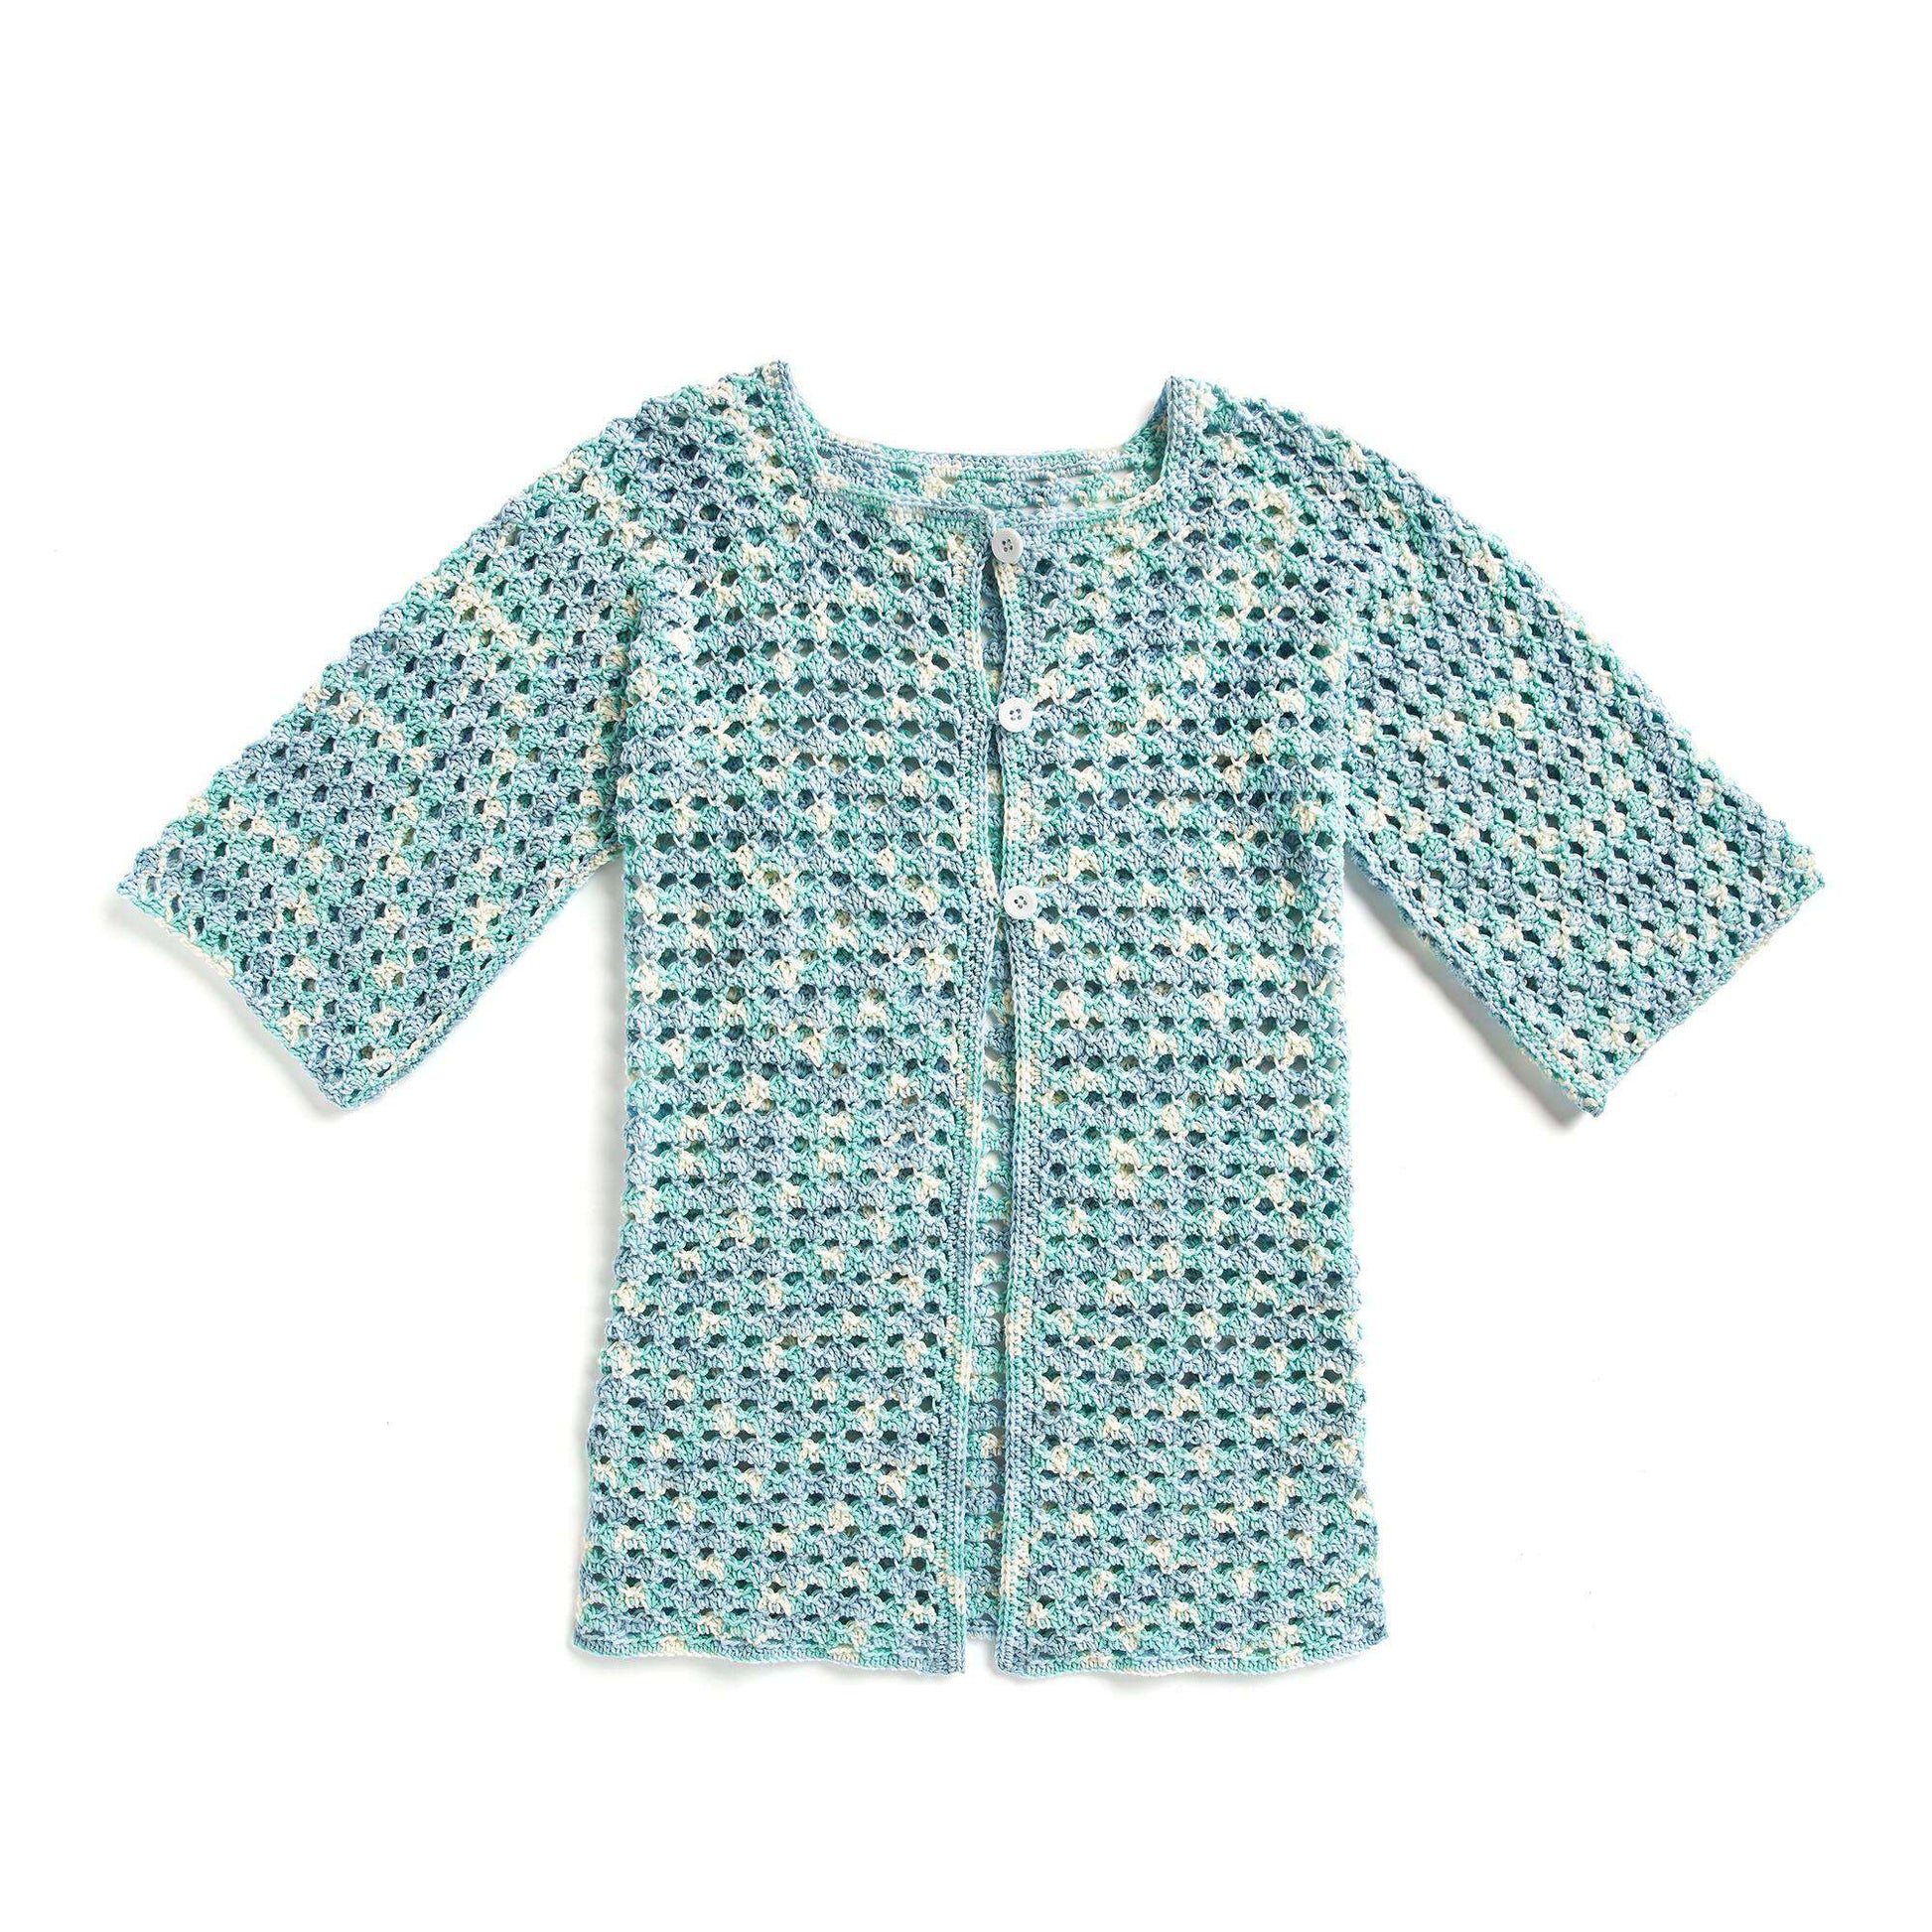 Free Bernat Crochet Summer Cardigan Pattern